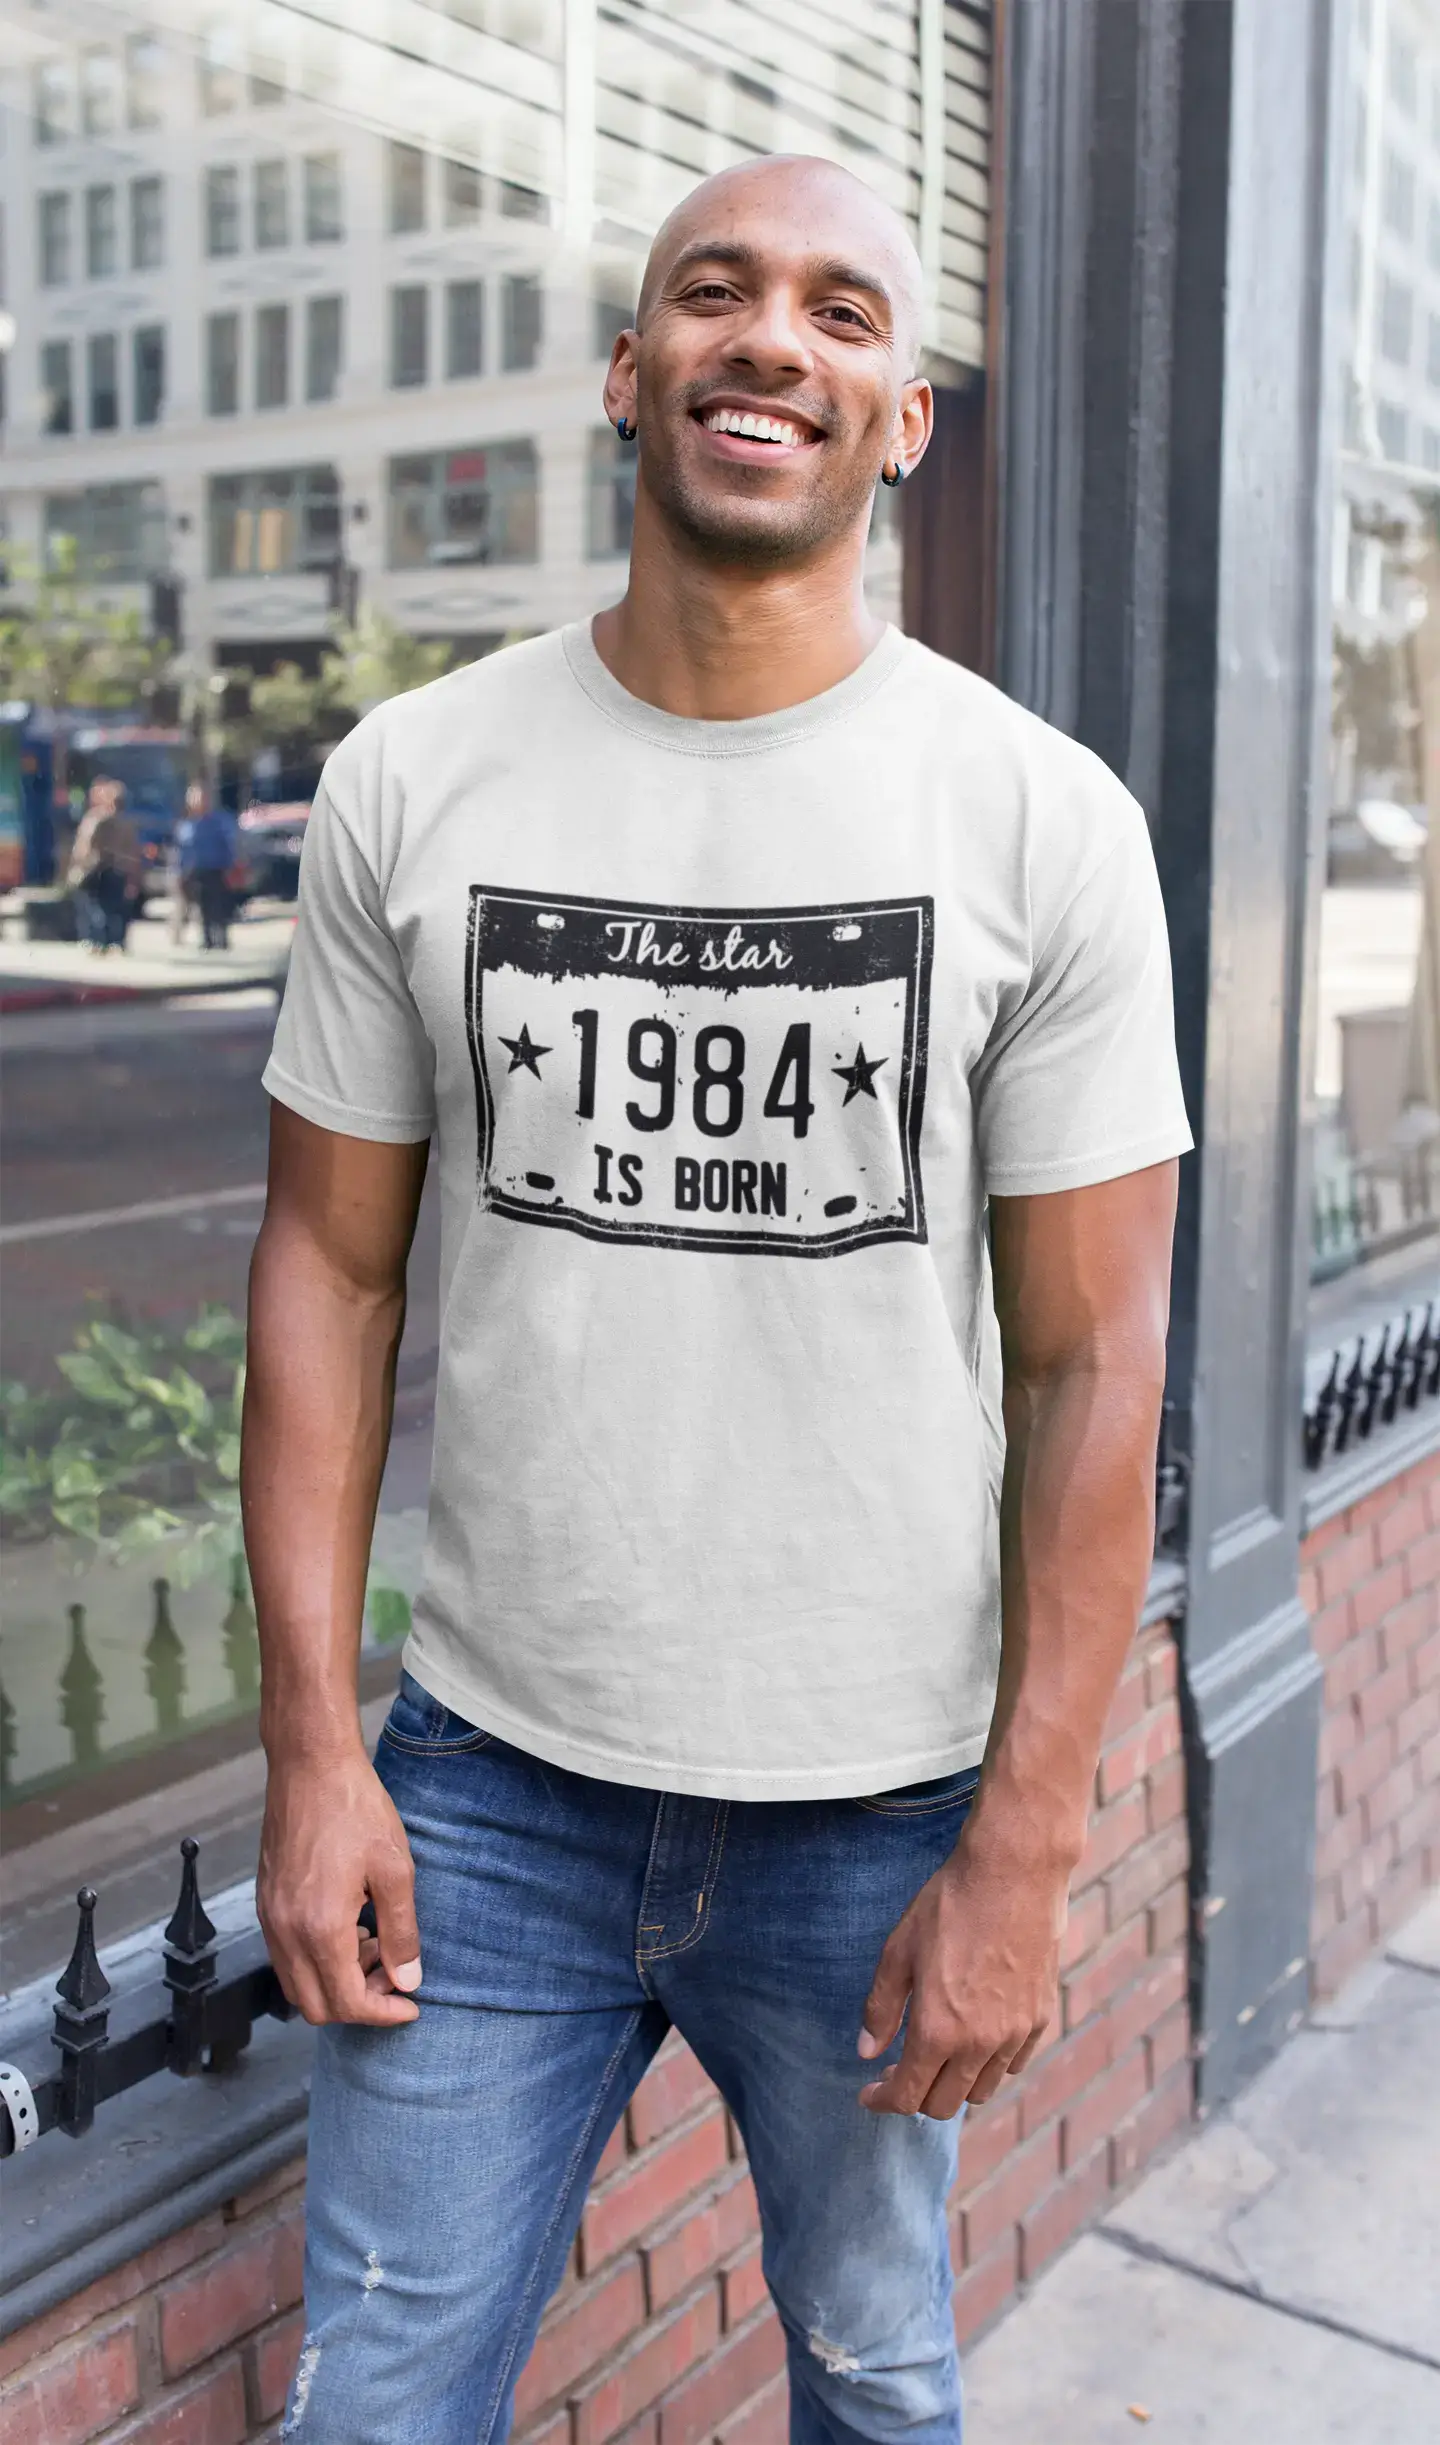 The Star 1984 is Born Men's T-shirt White Birthday Gift 00453